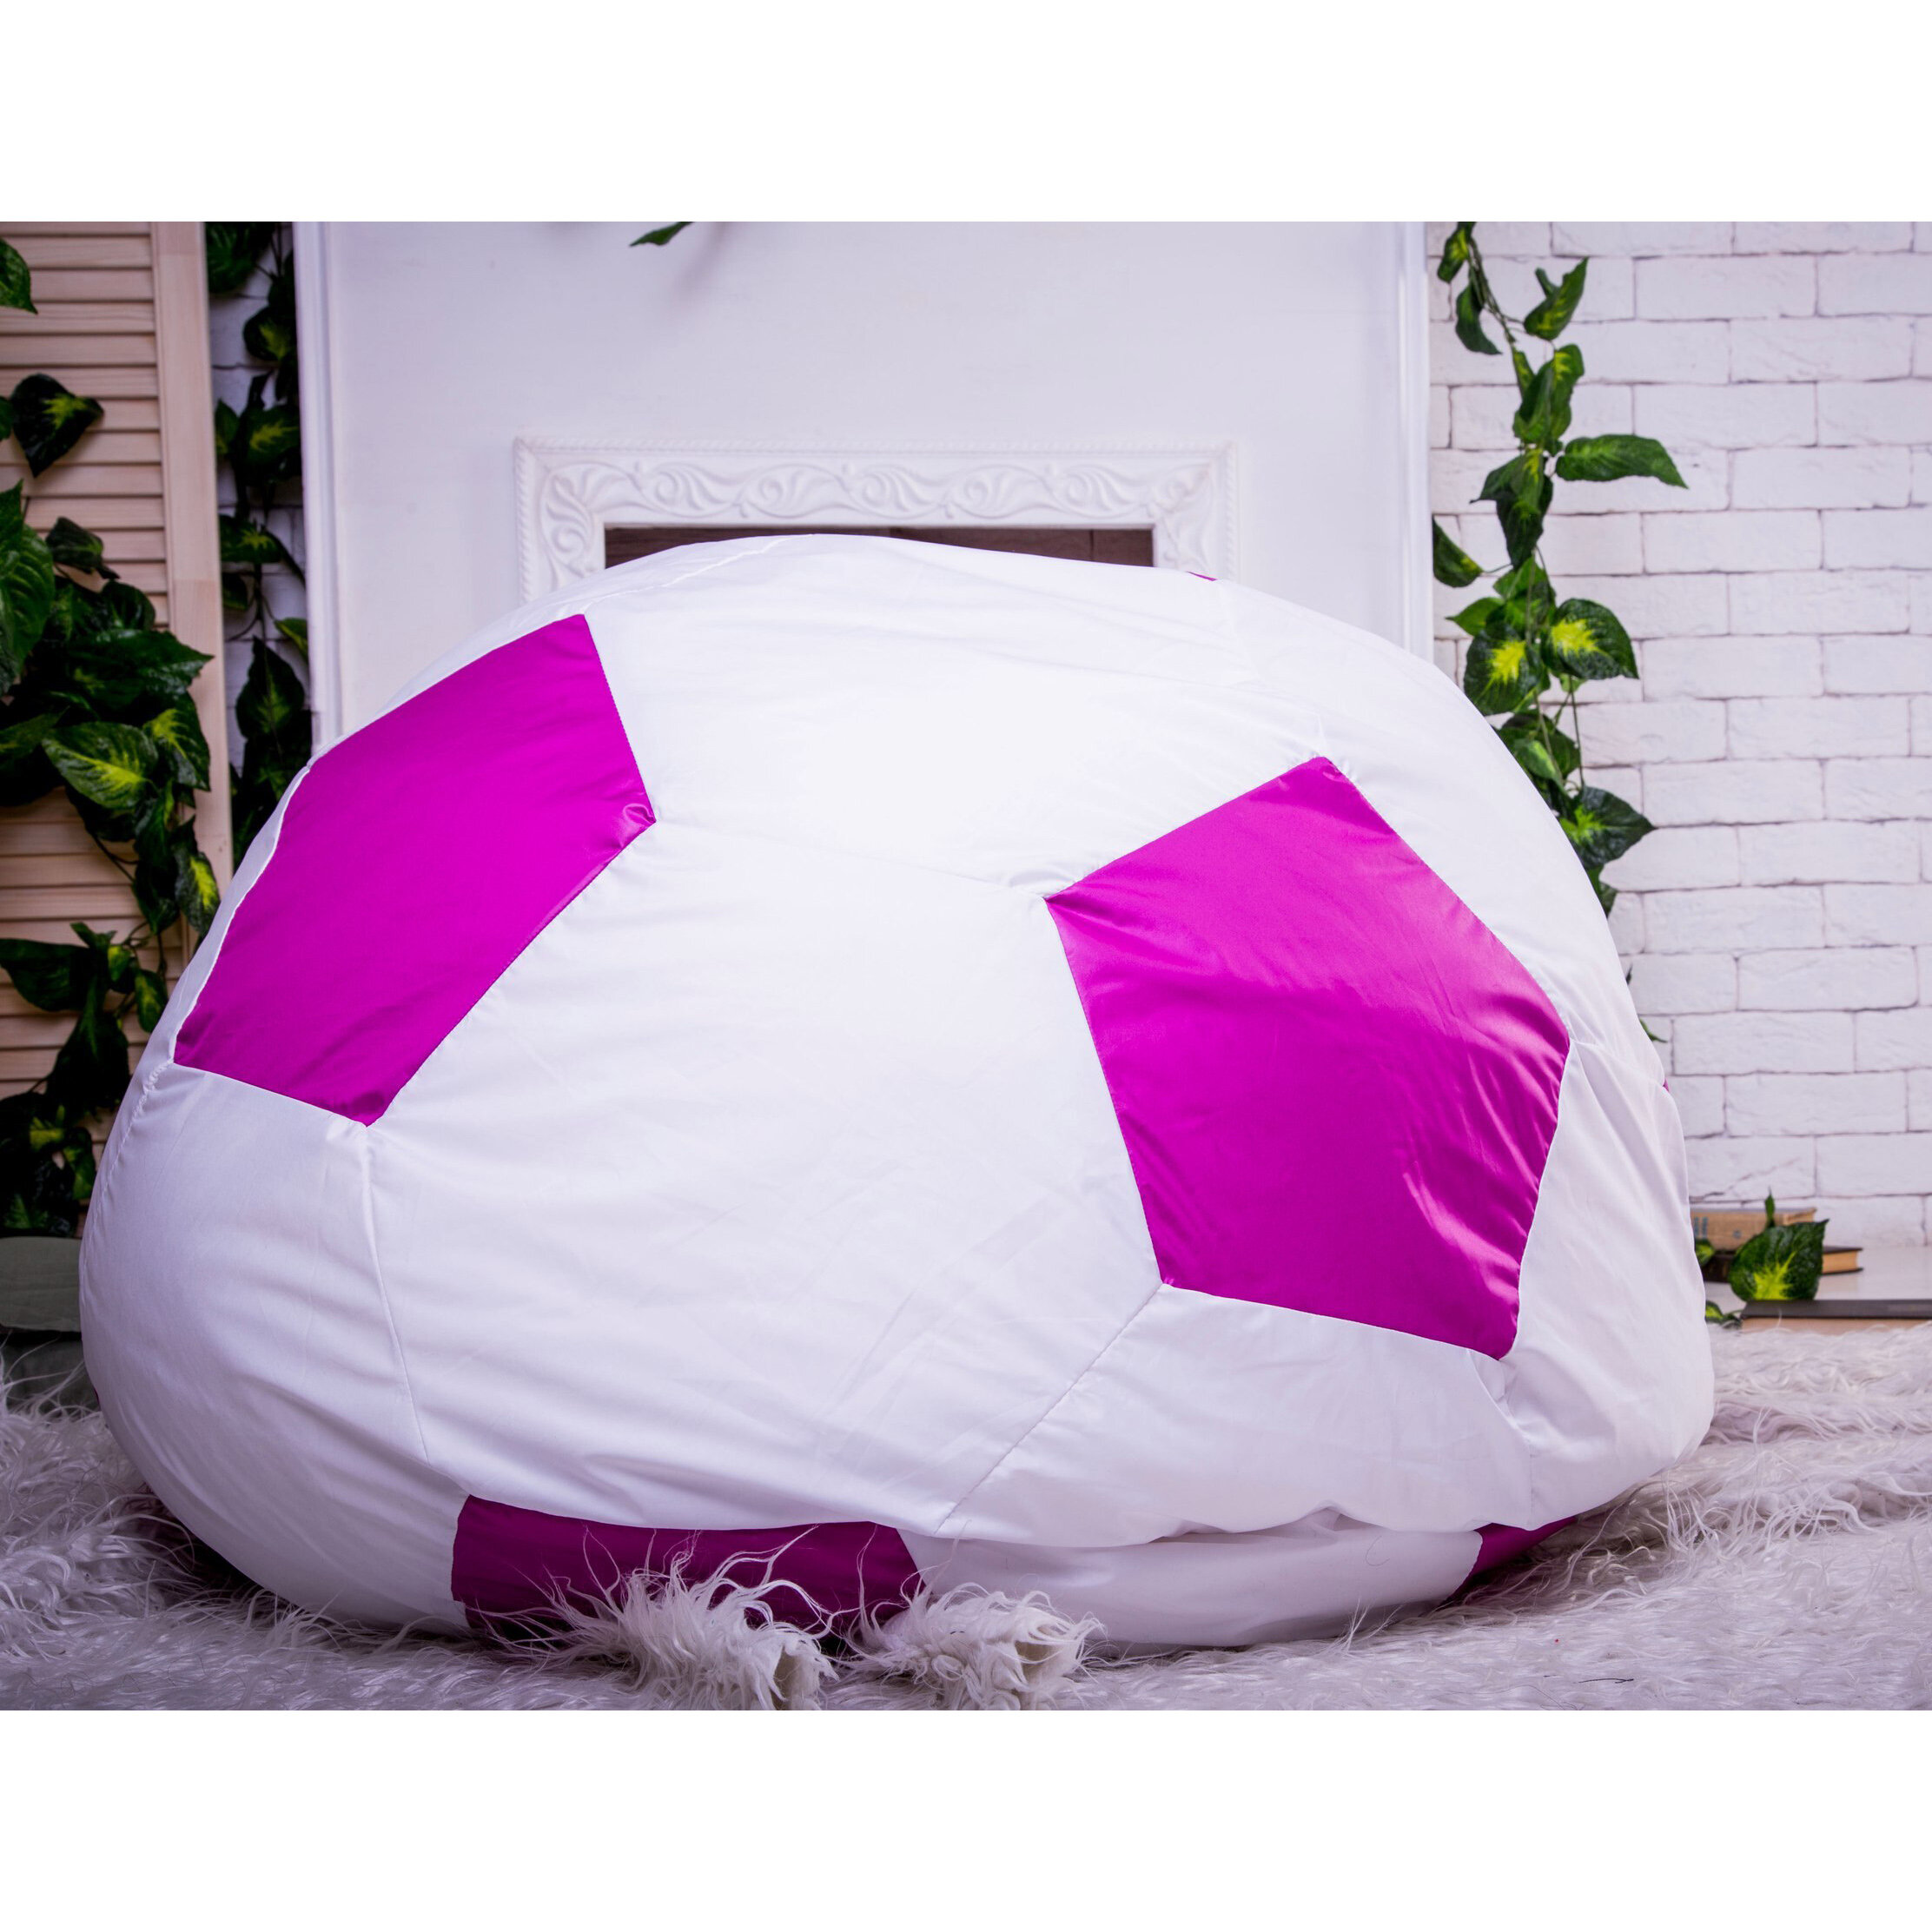 Мягкое кресло "Мяч" бело-сиреневое, ткань Дюспо милки, Диаметр 100см / 100 литров от производителя kreslo-Igrushka - фотография № 2